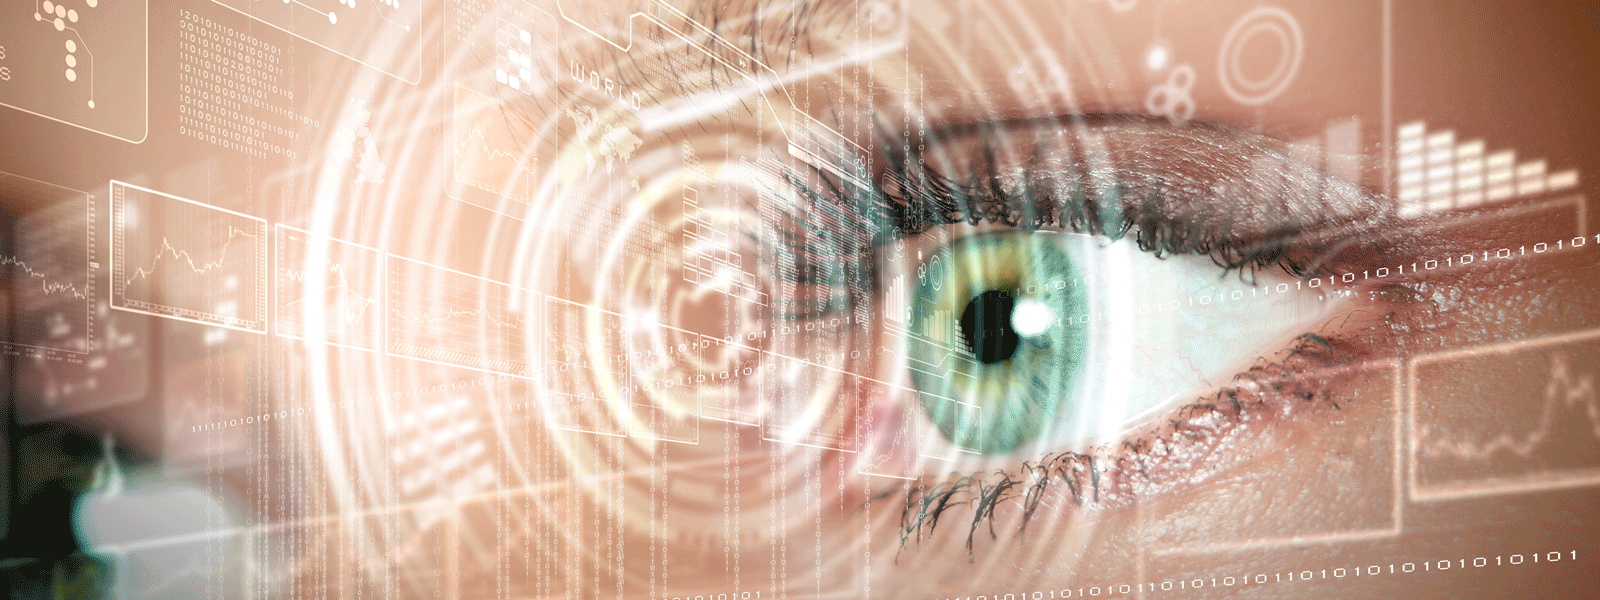 eye being scanned digitally